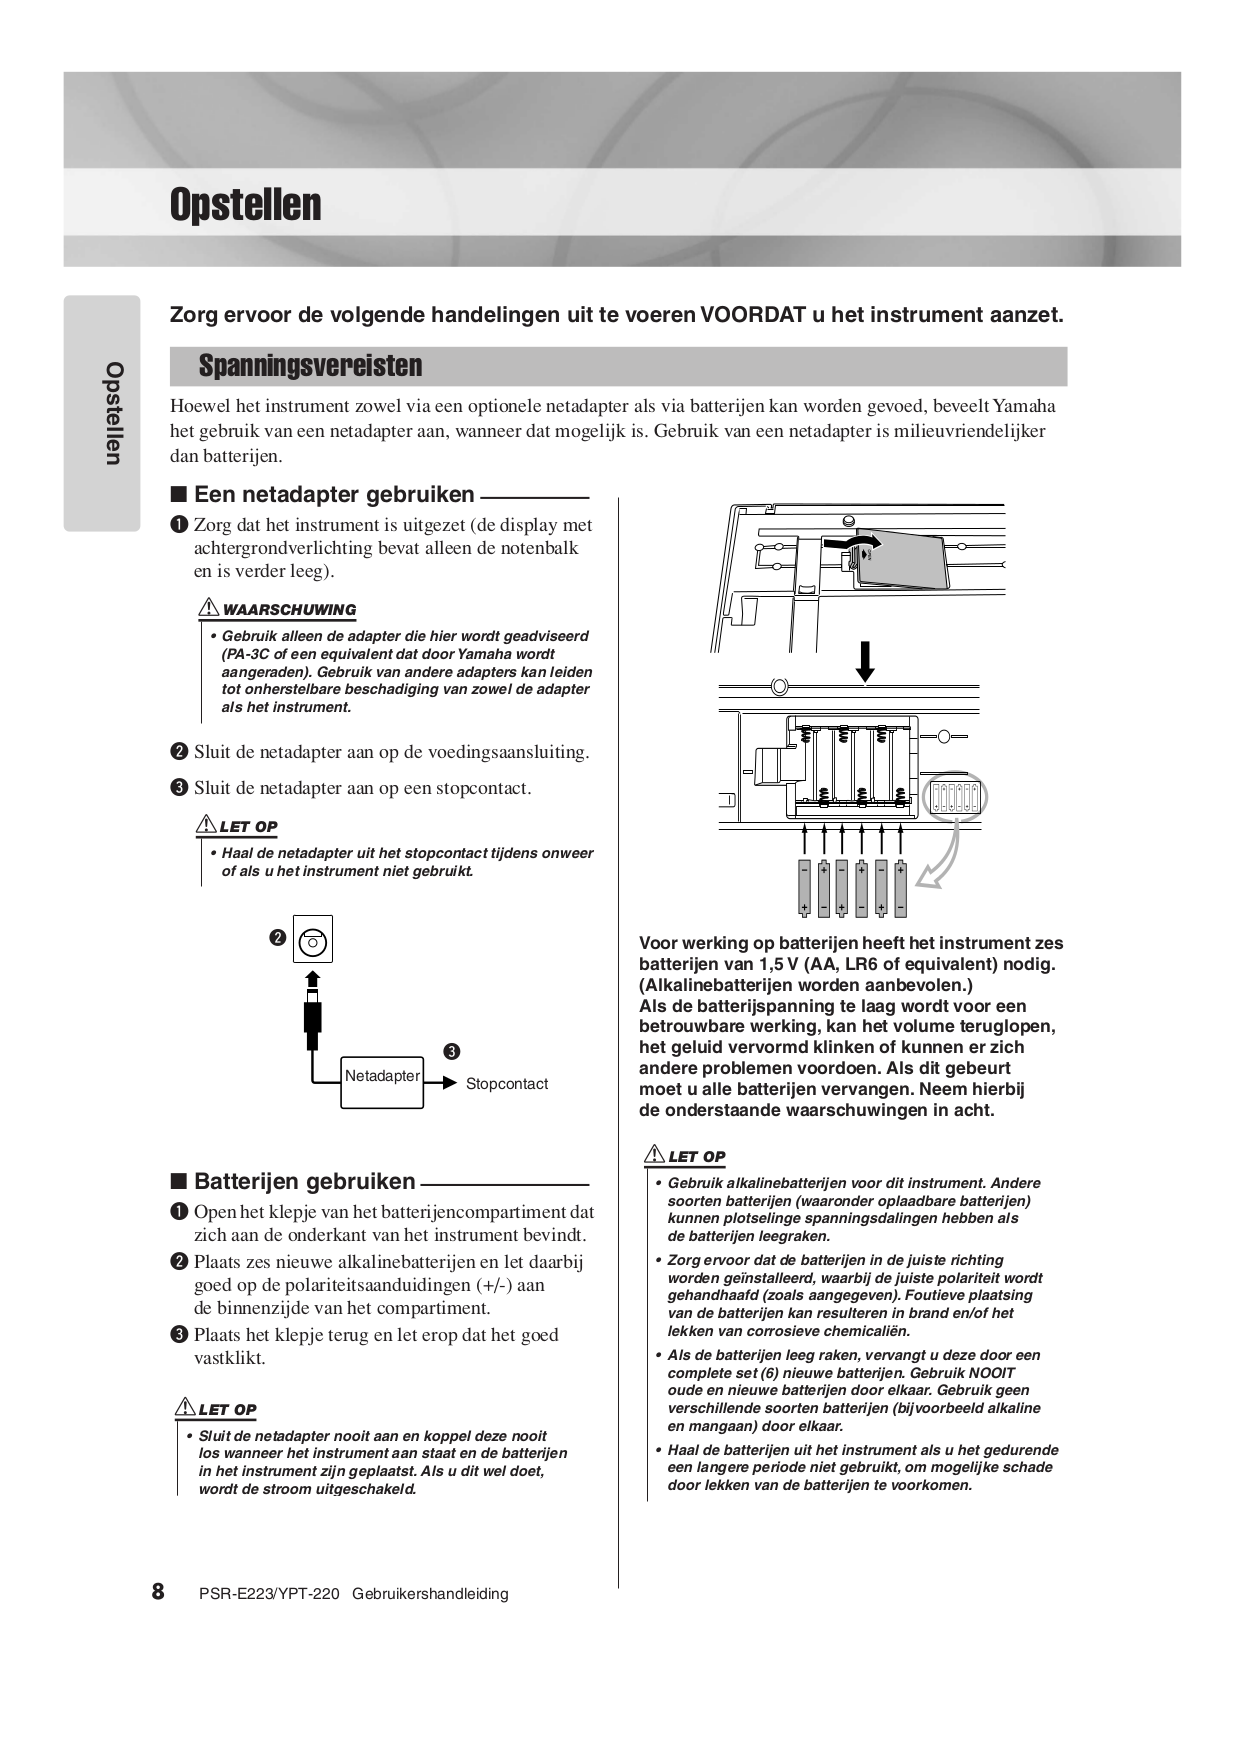 PDF manual for Yamaha Music Keyboard YPT-220